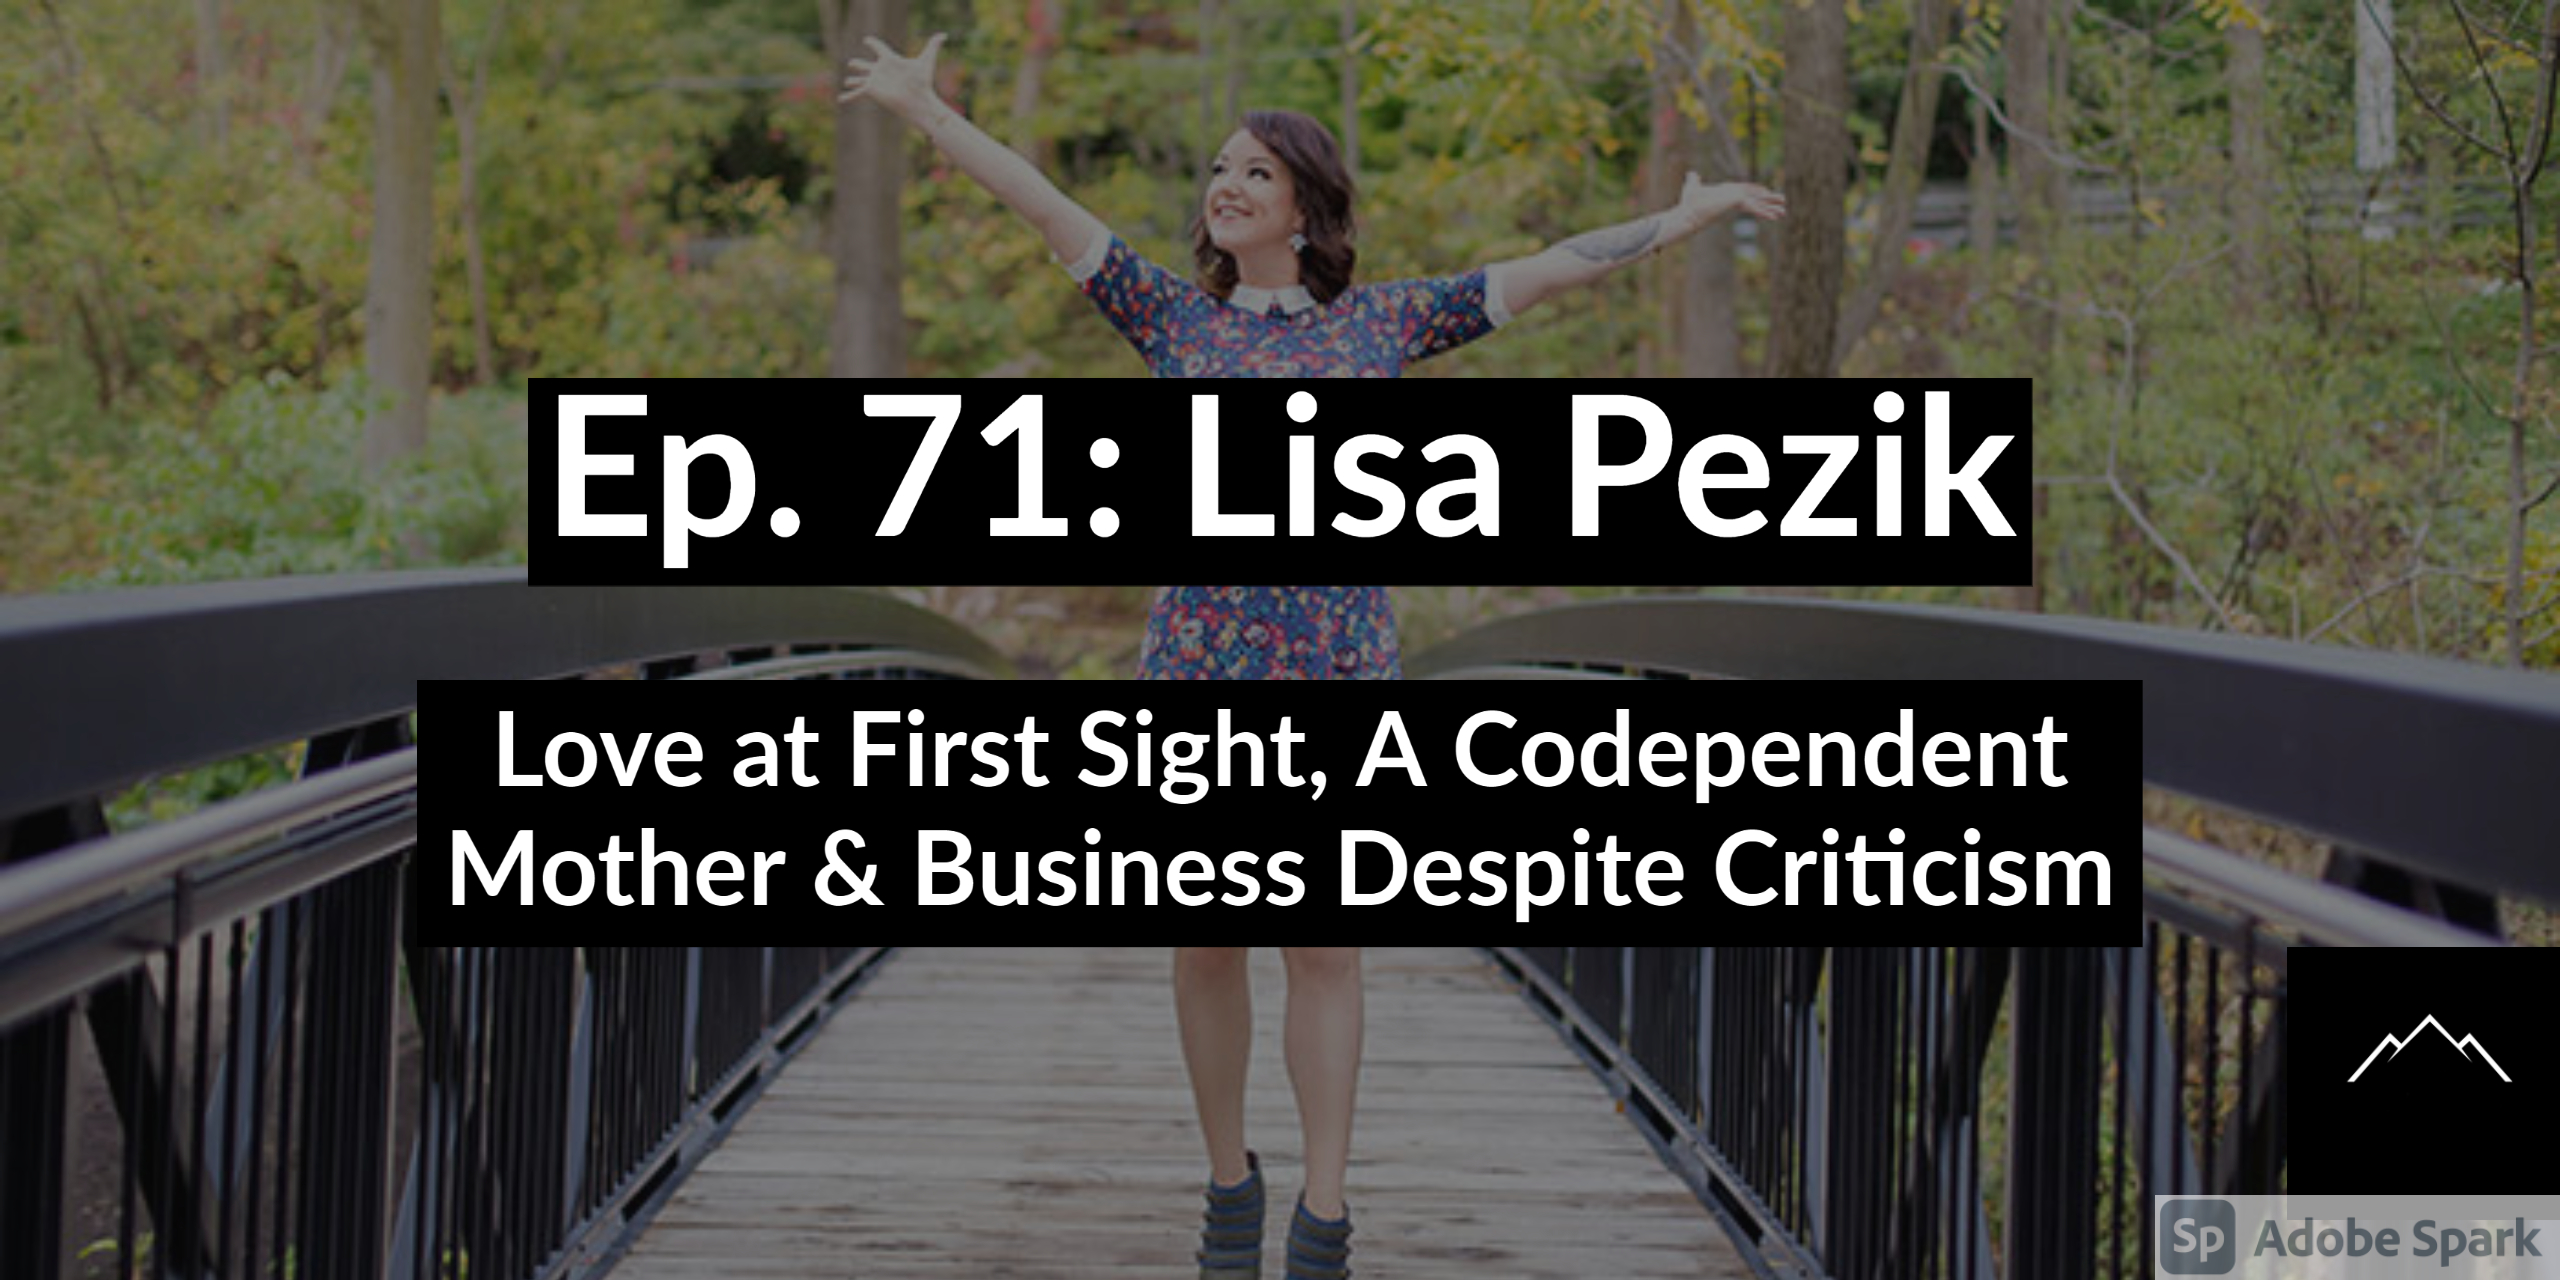 Ep. 71: Lisa Pezik | Love at First Sight, A Codependent Mother & Business Despite Criticism